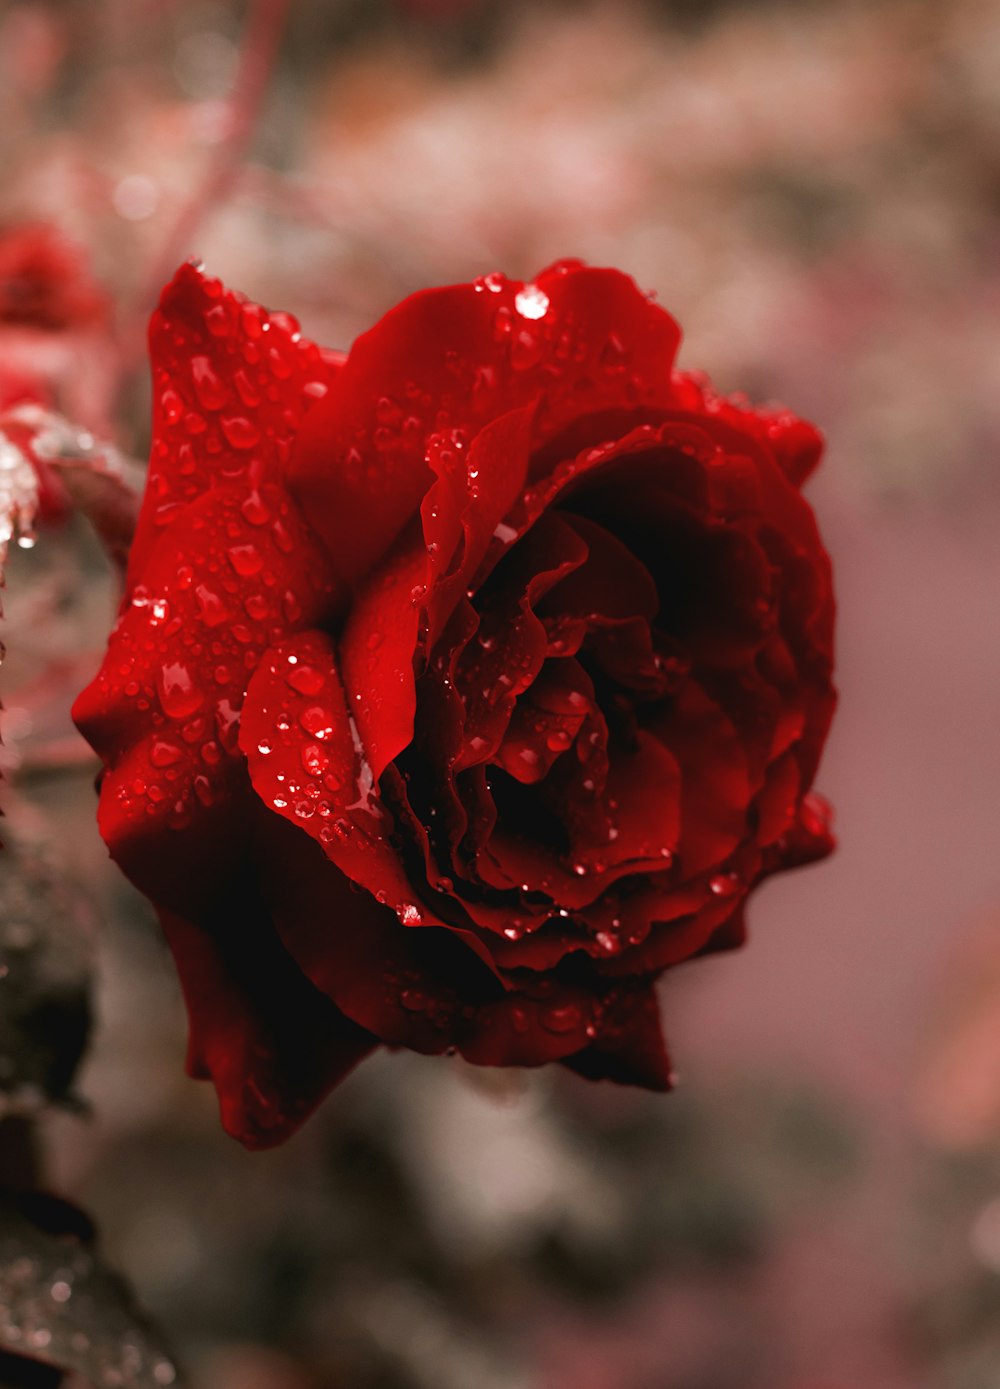 Rose Wallpapers: Free HD Download 500+ HQ | Unsplash